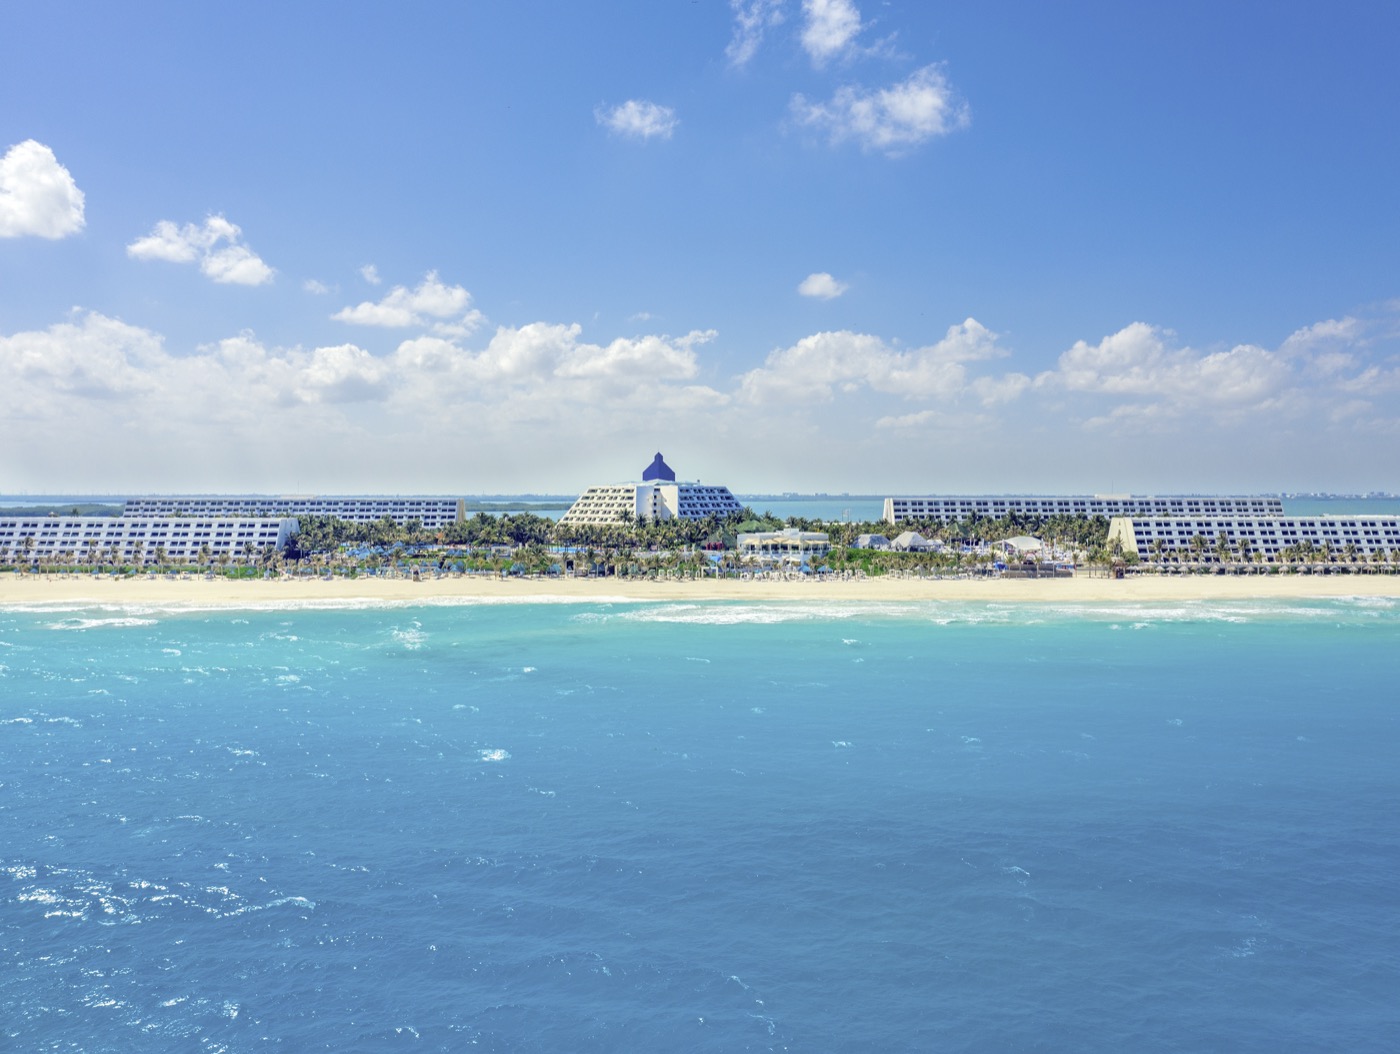 Vista Panorámica del Hotel Grand Oasis Cancun con vista al Mar